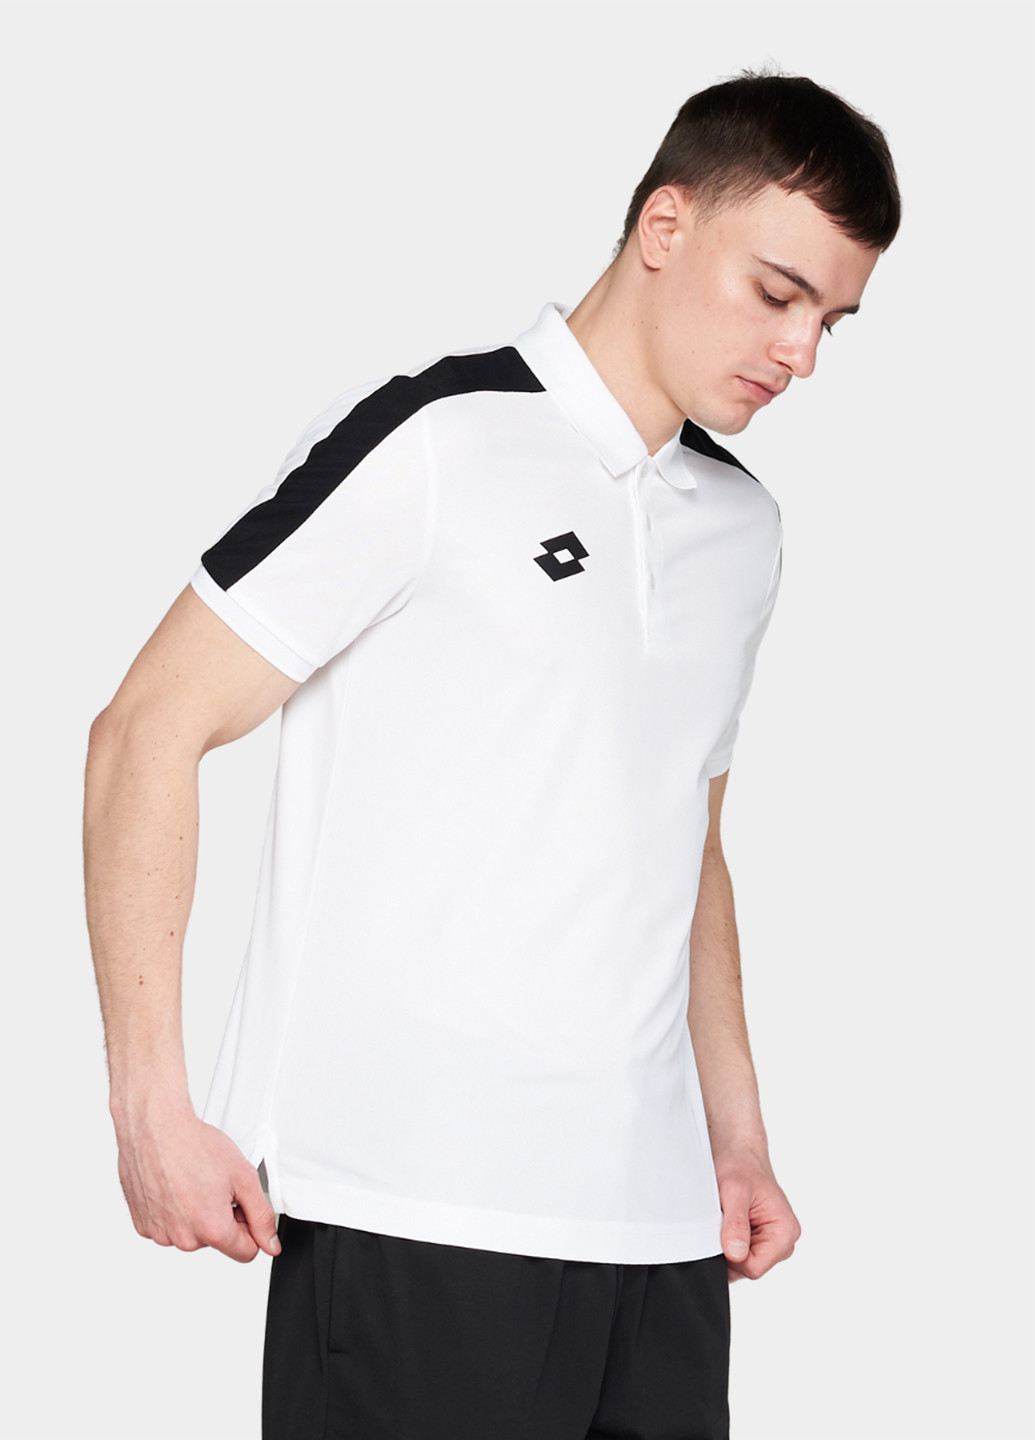 Белая футболка-поло для мужчин Lotto с логотипом